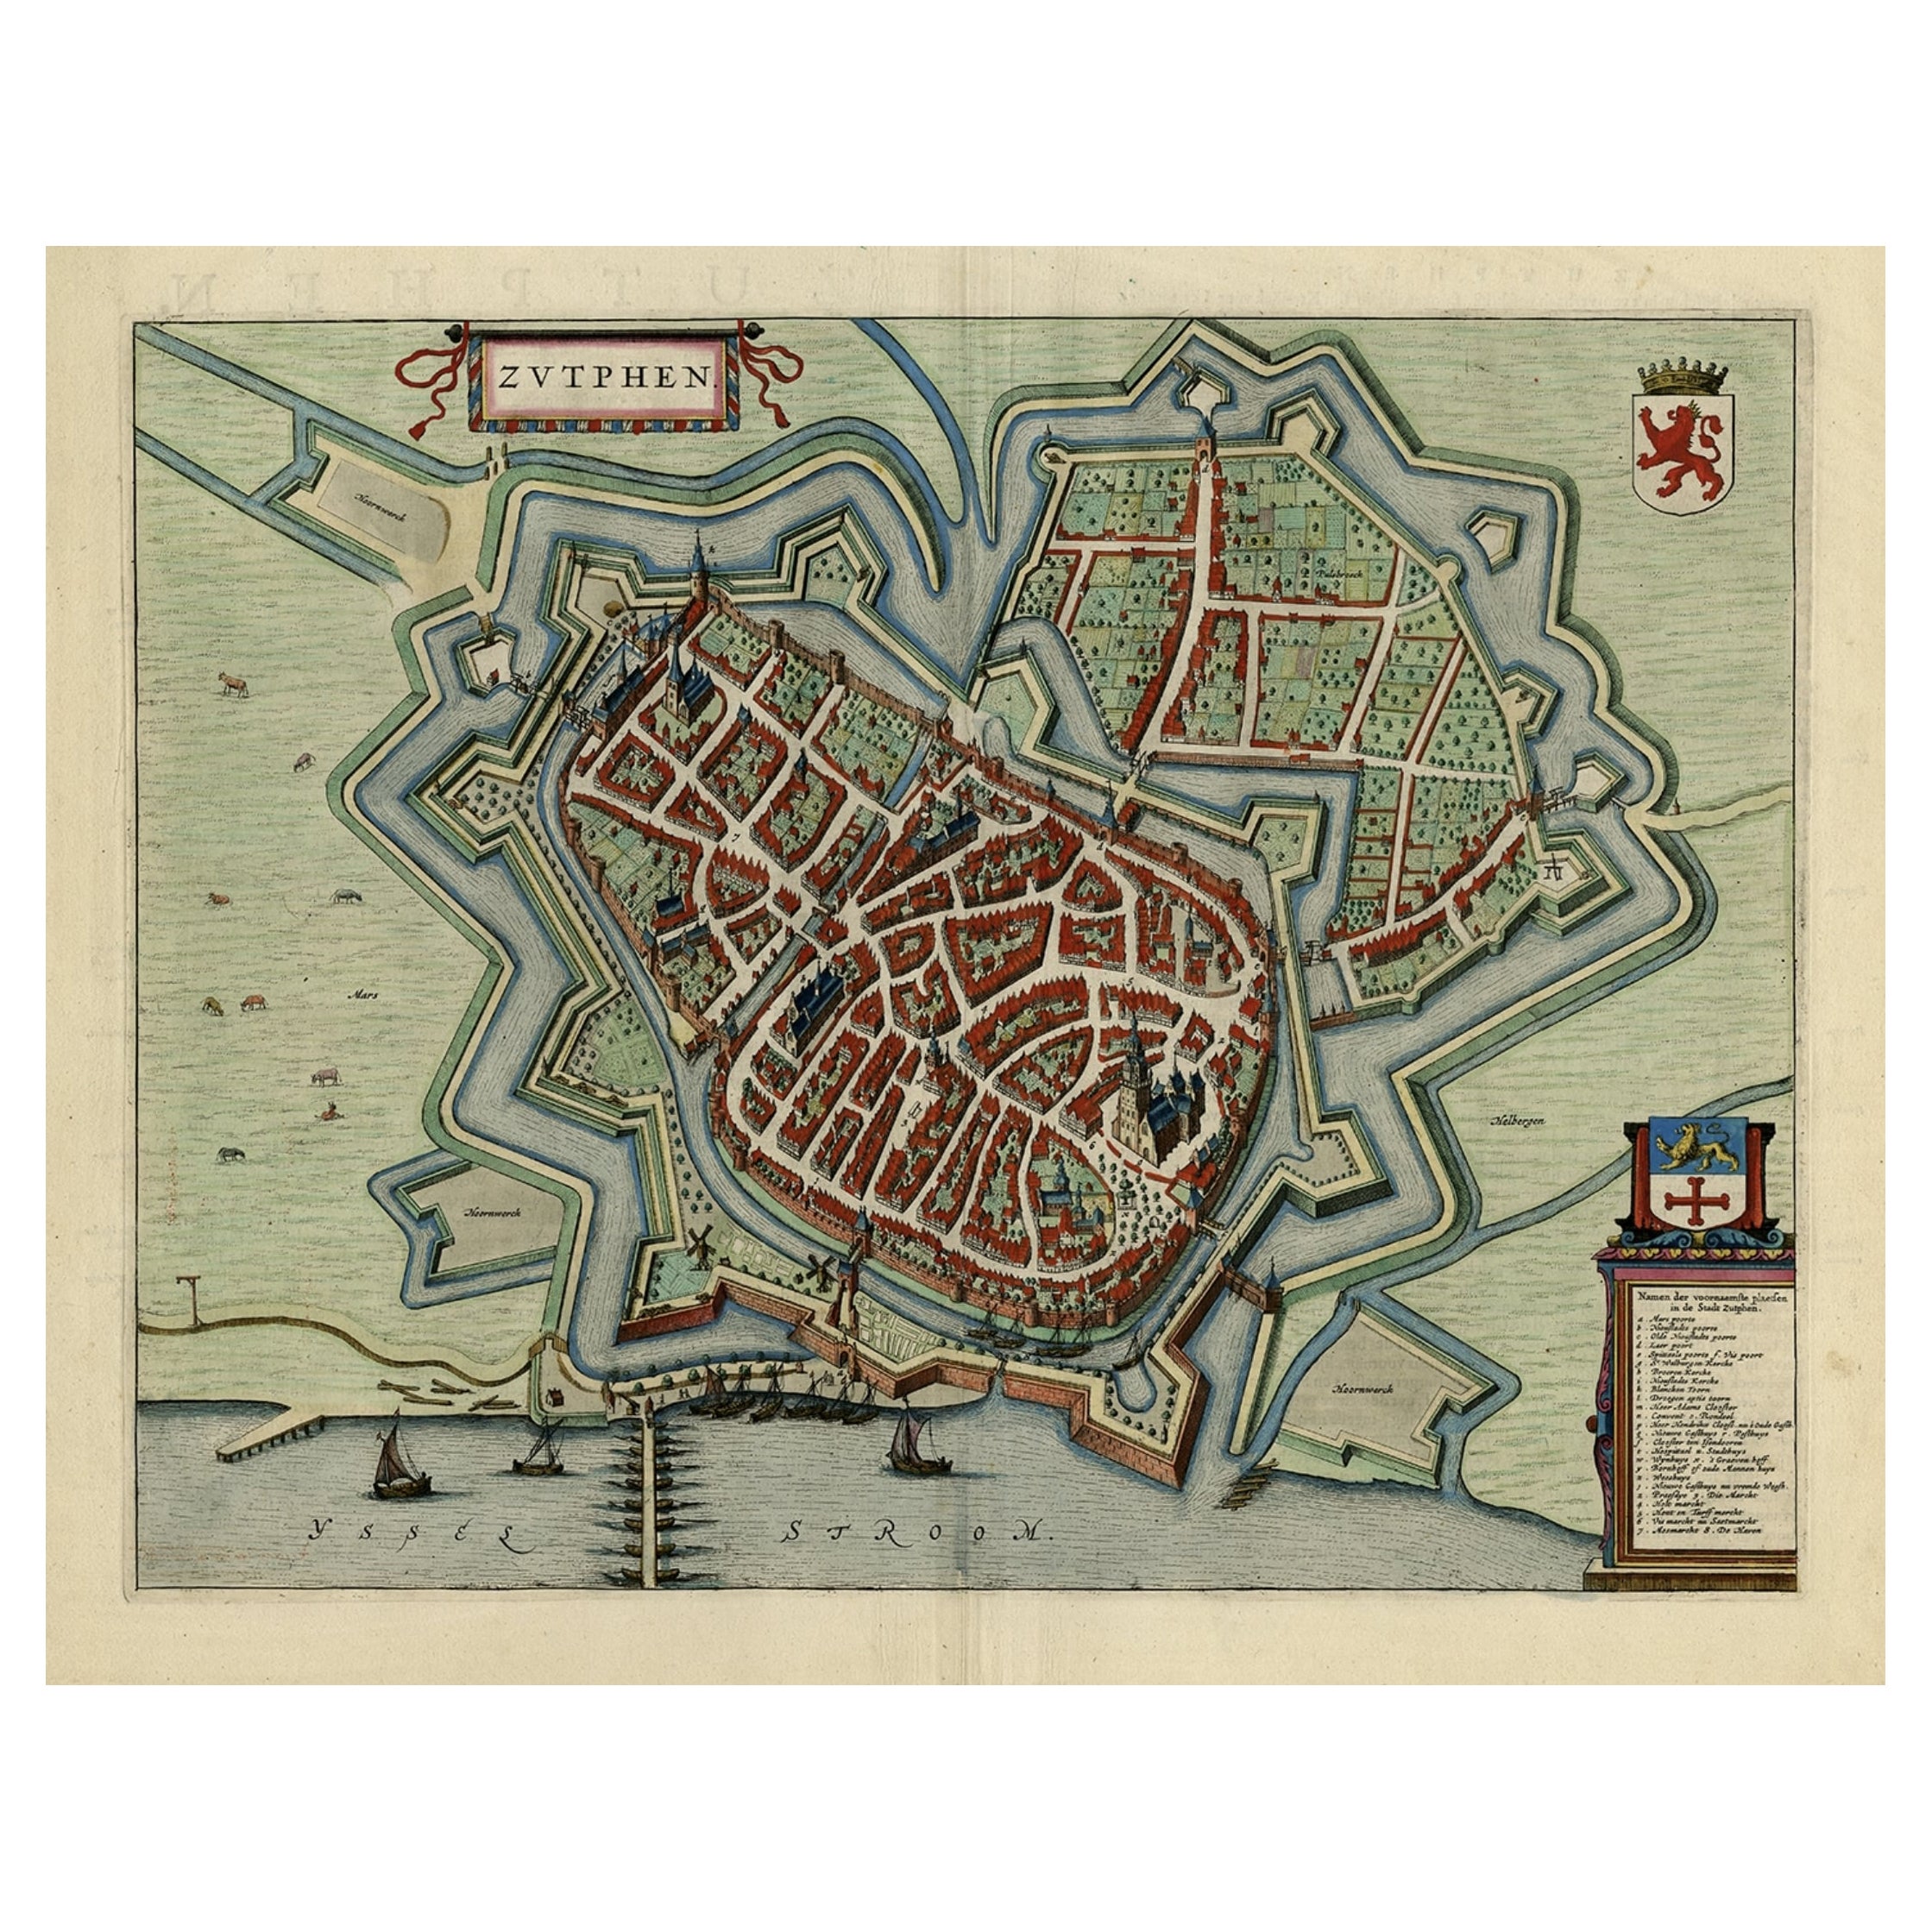 Original Map with Bird's-Eye View of Zutphen in the Netherlands by Blaeu, 1649